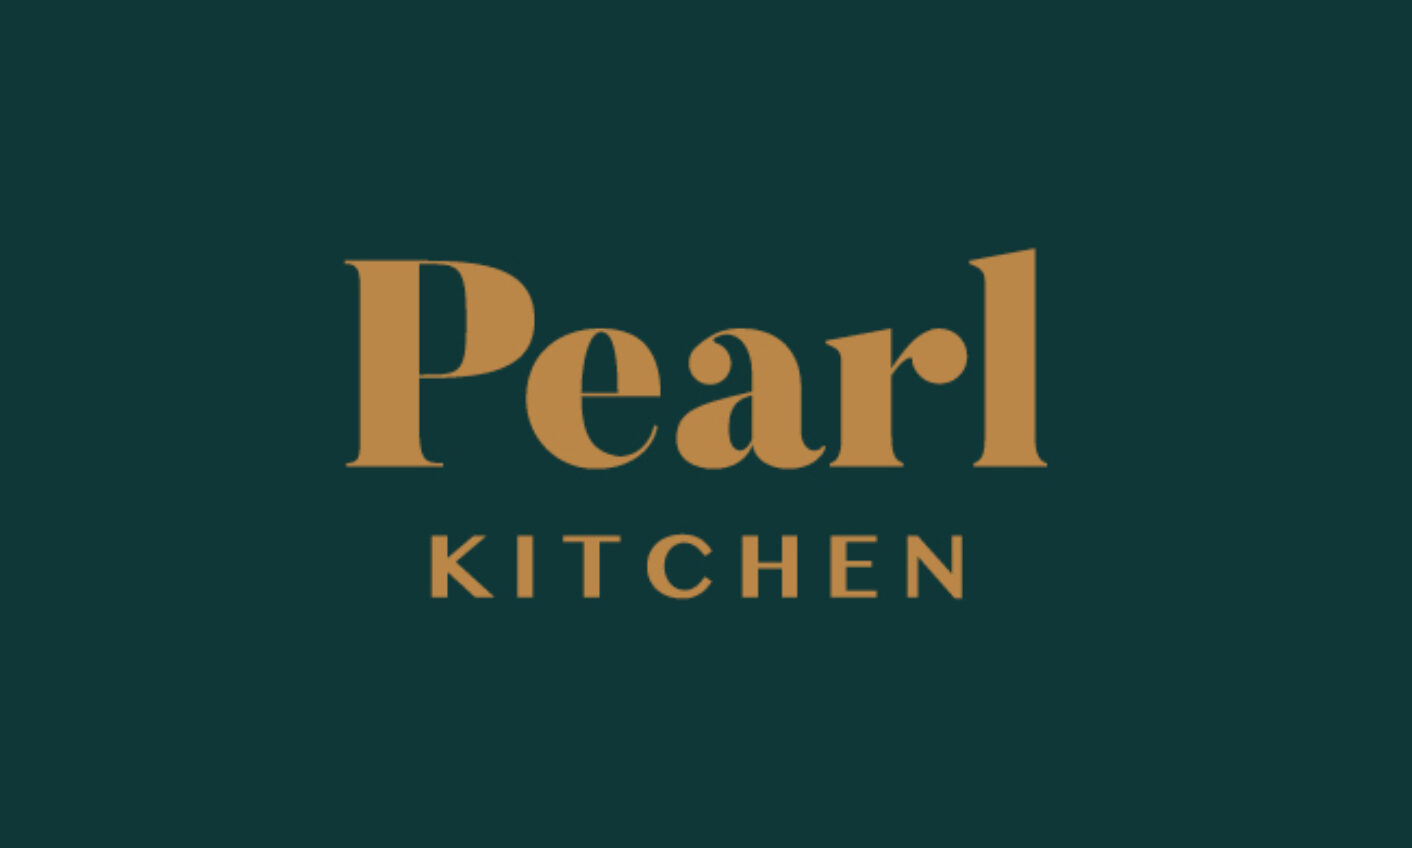 Pearl Kitchen Social Media Post